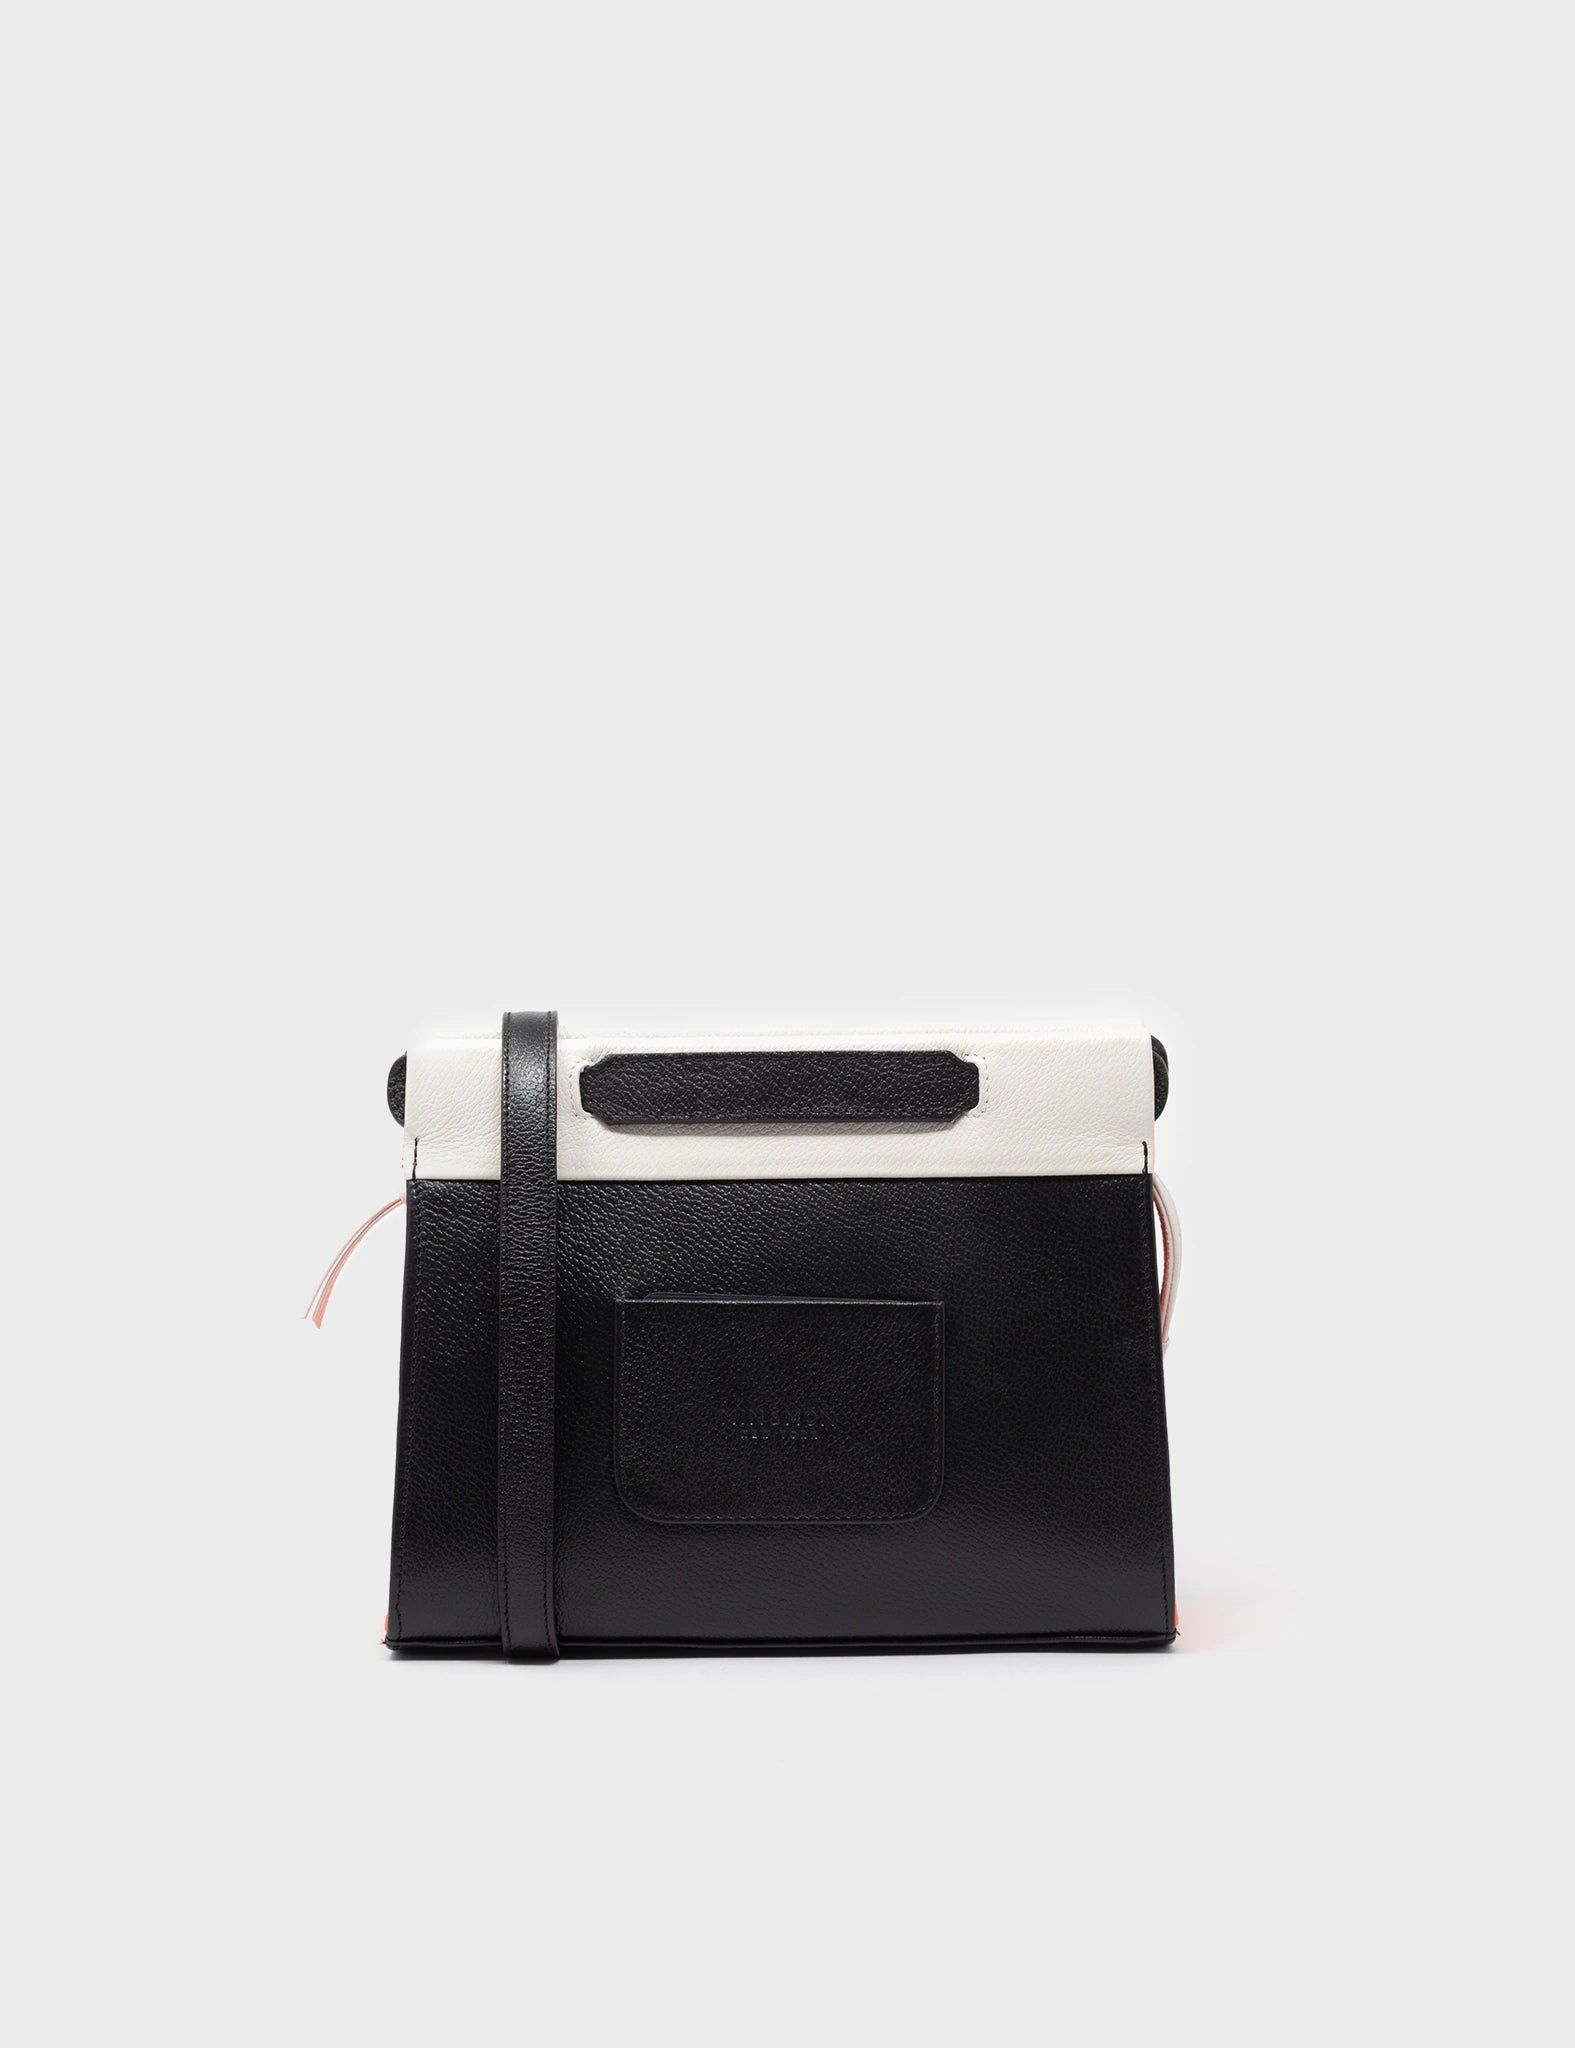 Vali Crossbody Small Black And Neon Orange Leather Bag - Eyes Applique Adjustable Handle - Back view